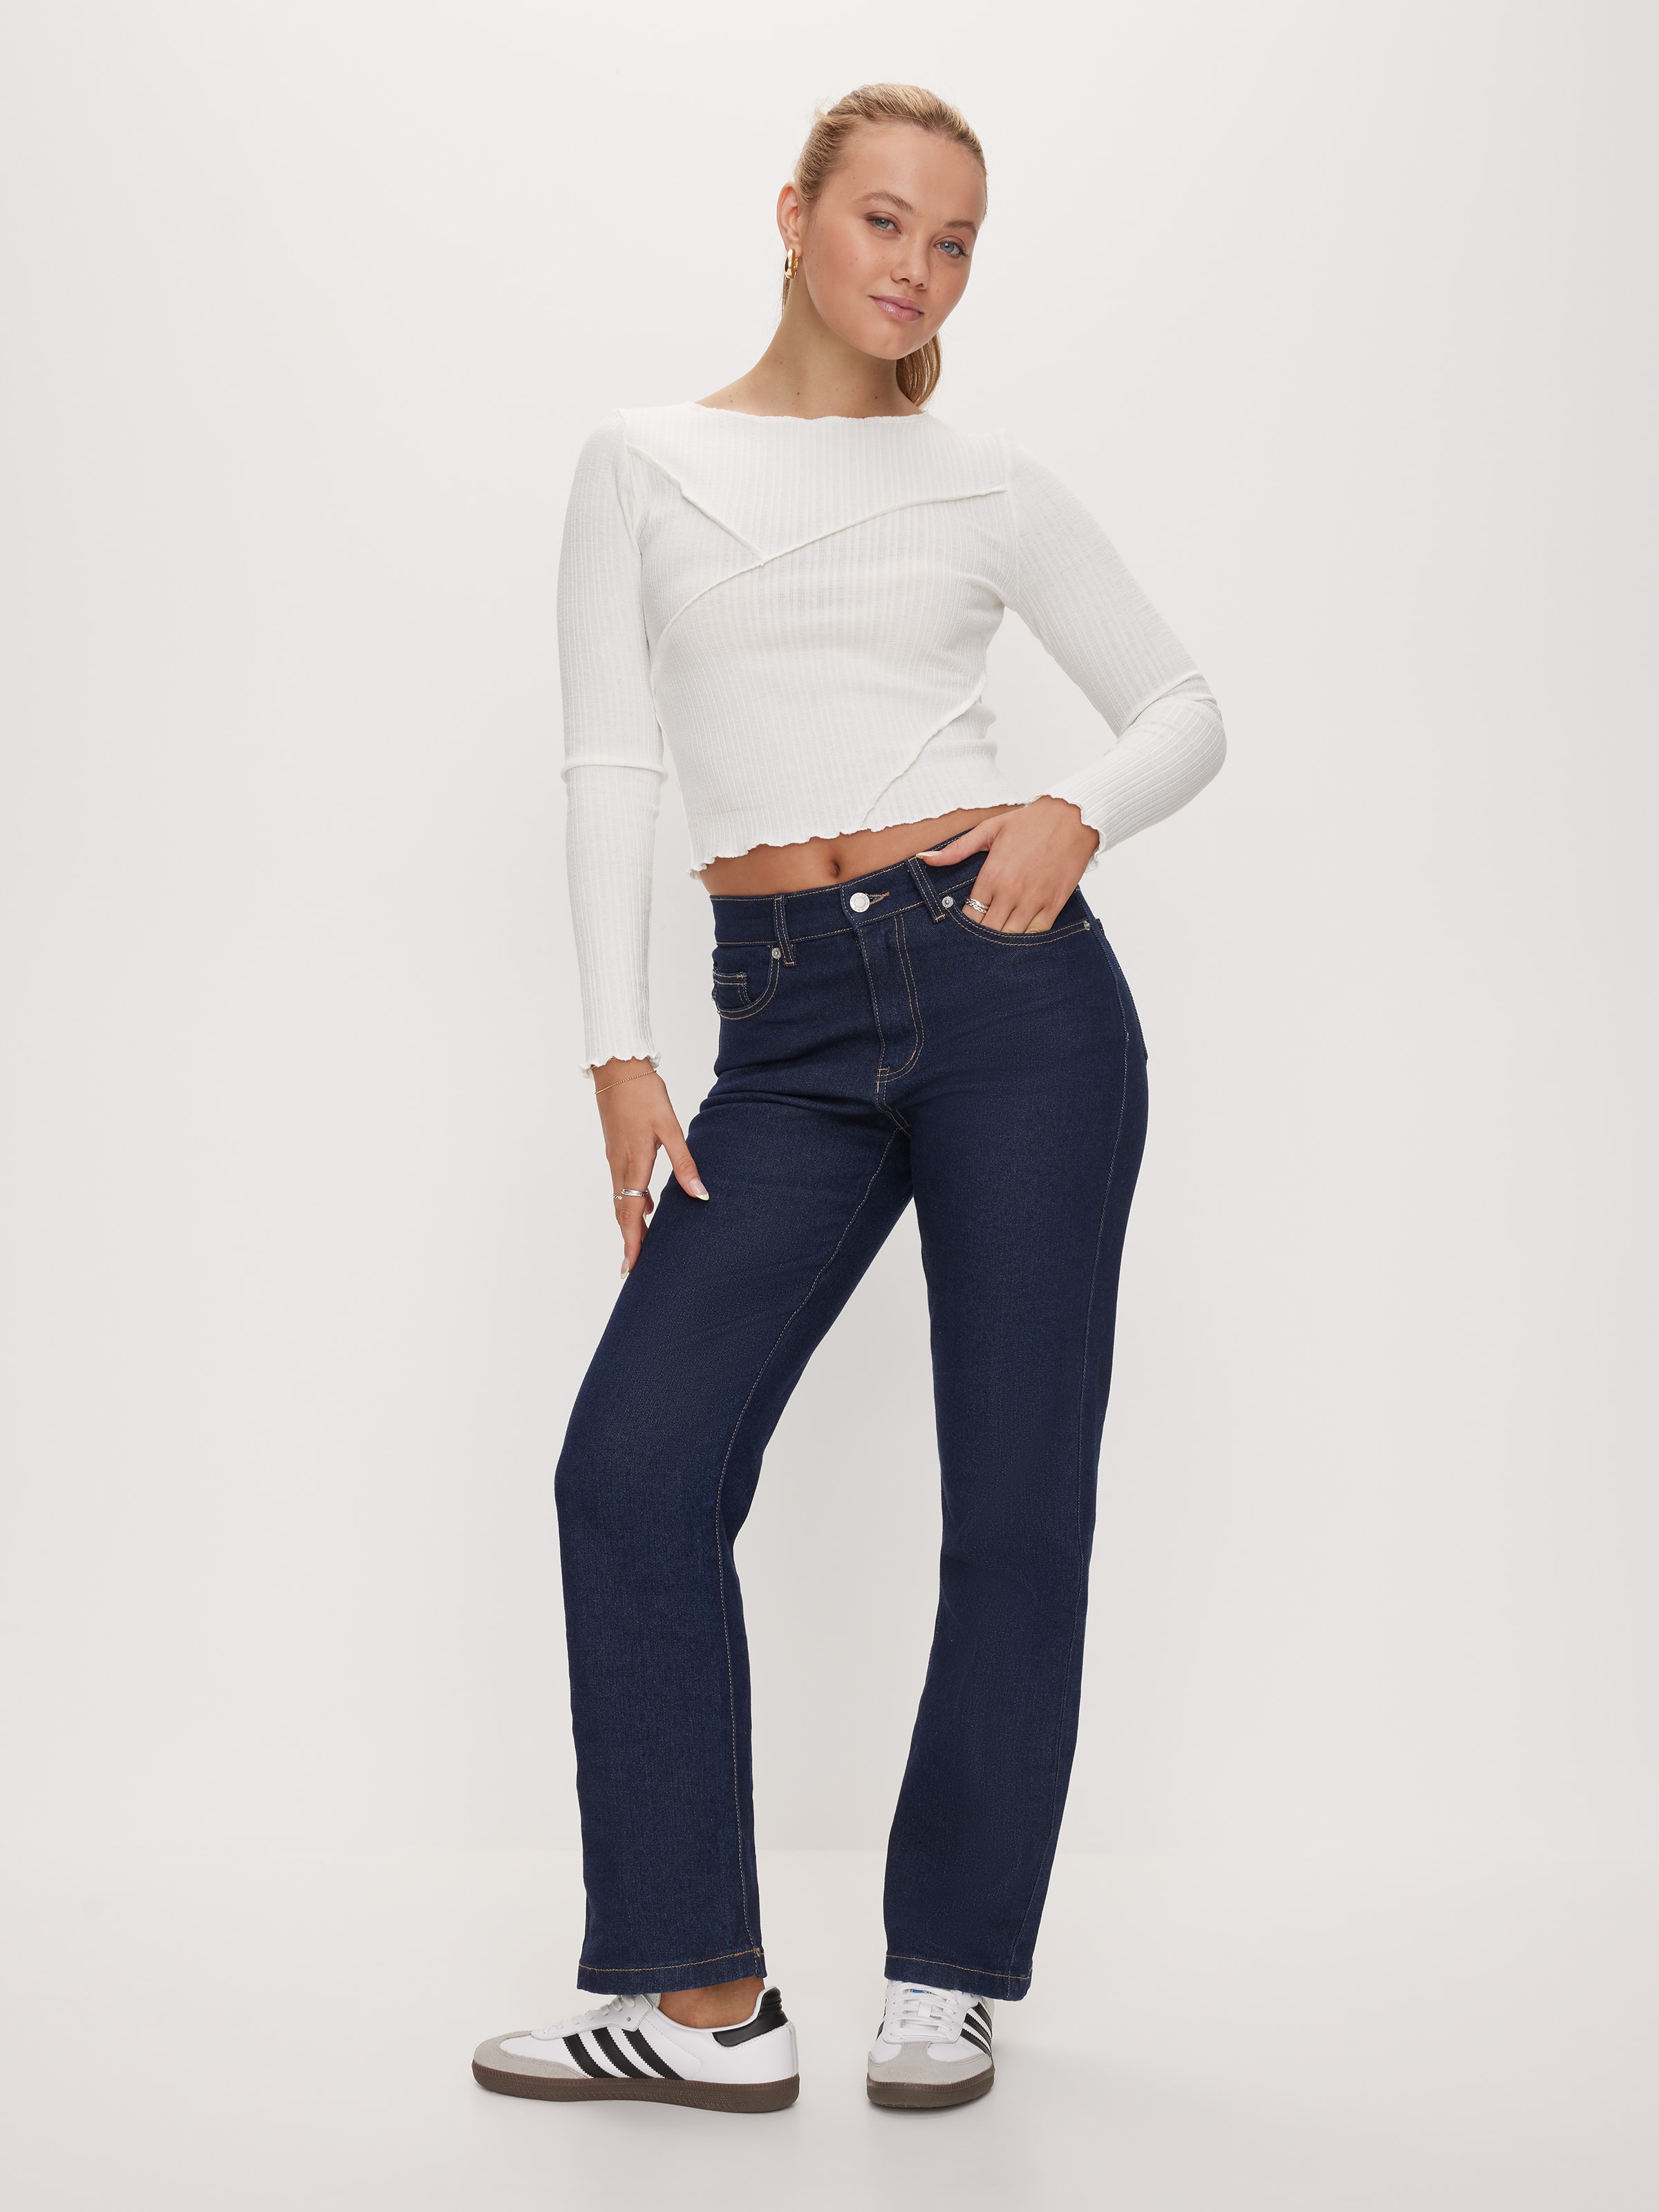 Jeans For Women - Denim Pants, Skinny Jeans & More